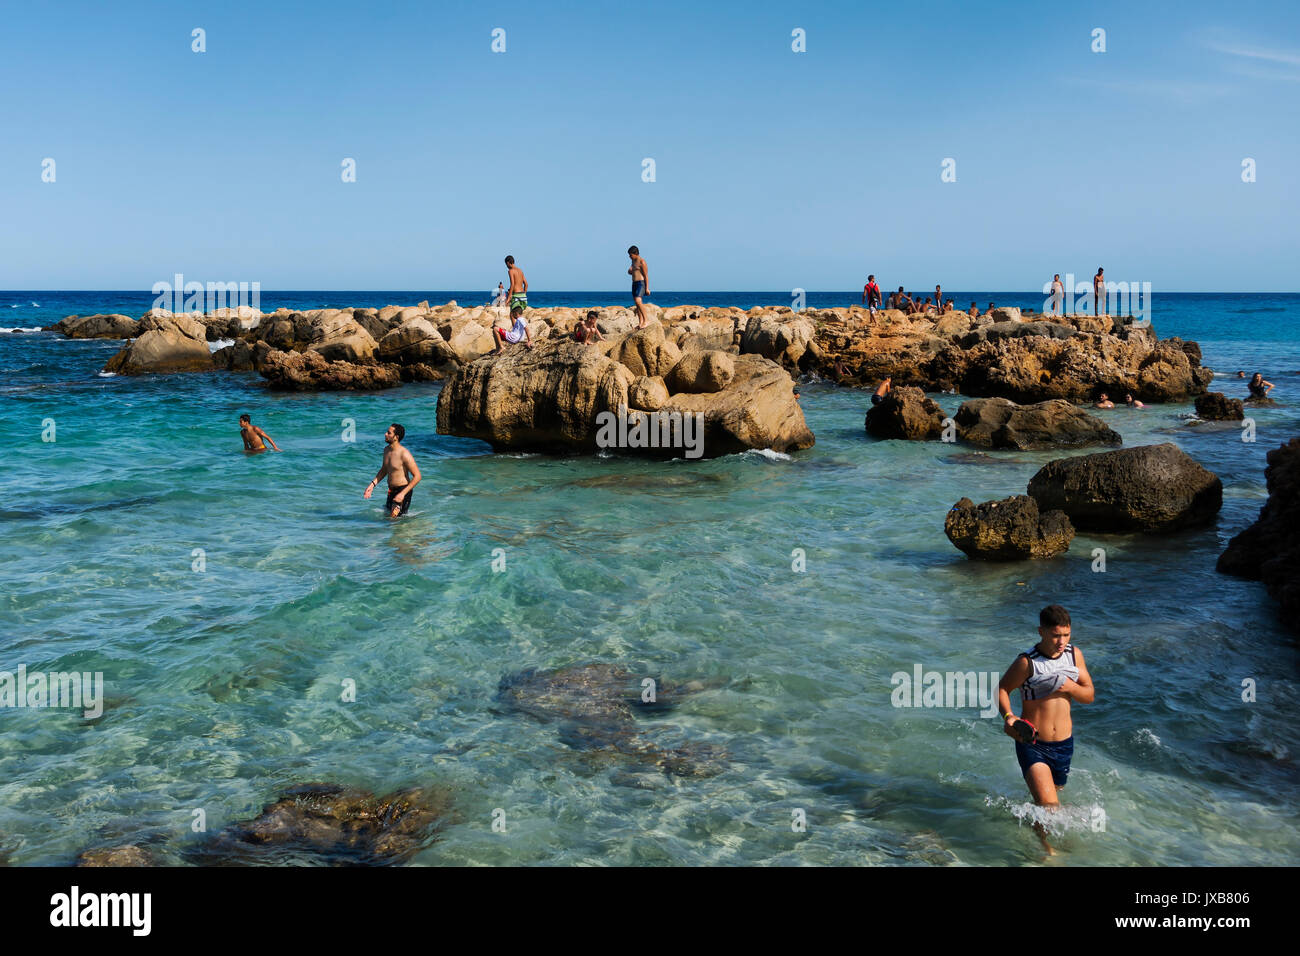 KELIBIA, Túnez - Agosto 13, 2017: la gente disfruta de la vida en la playa en verano Foto de stock